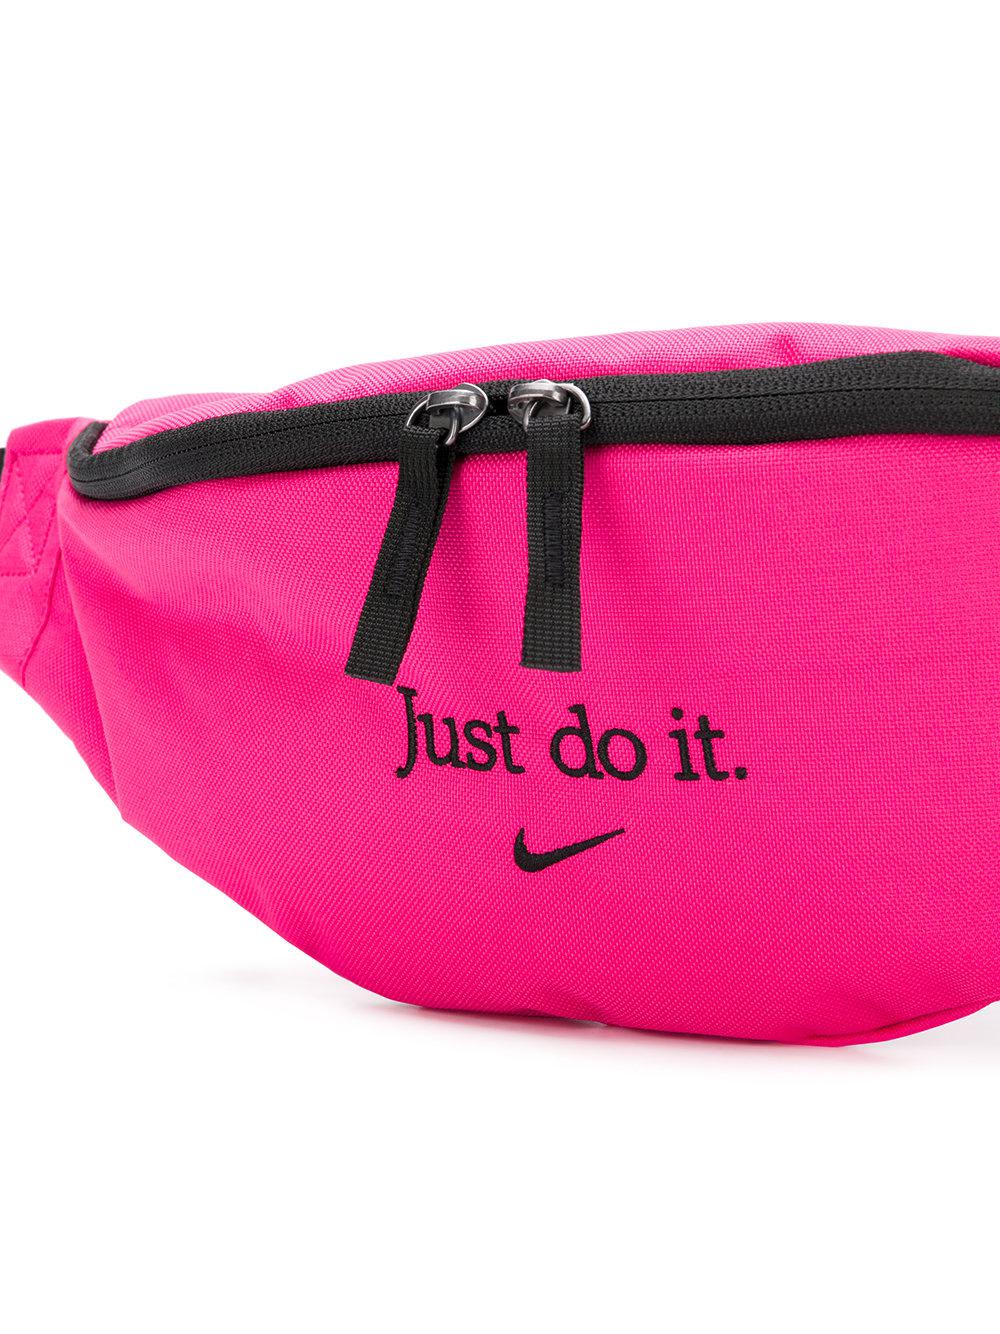 Nike 'just Do It' Belt Bag for Men - Lyst